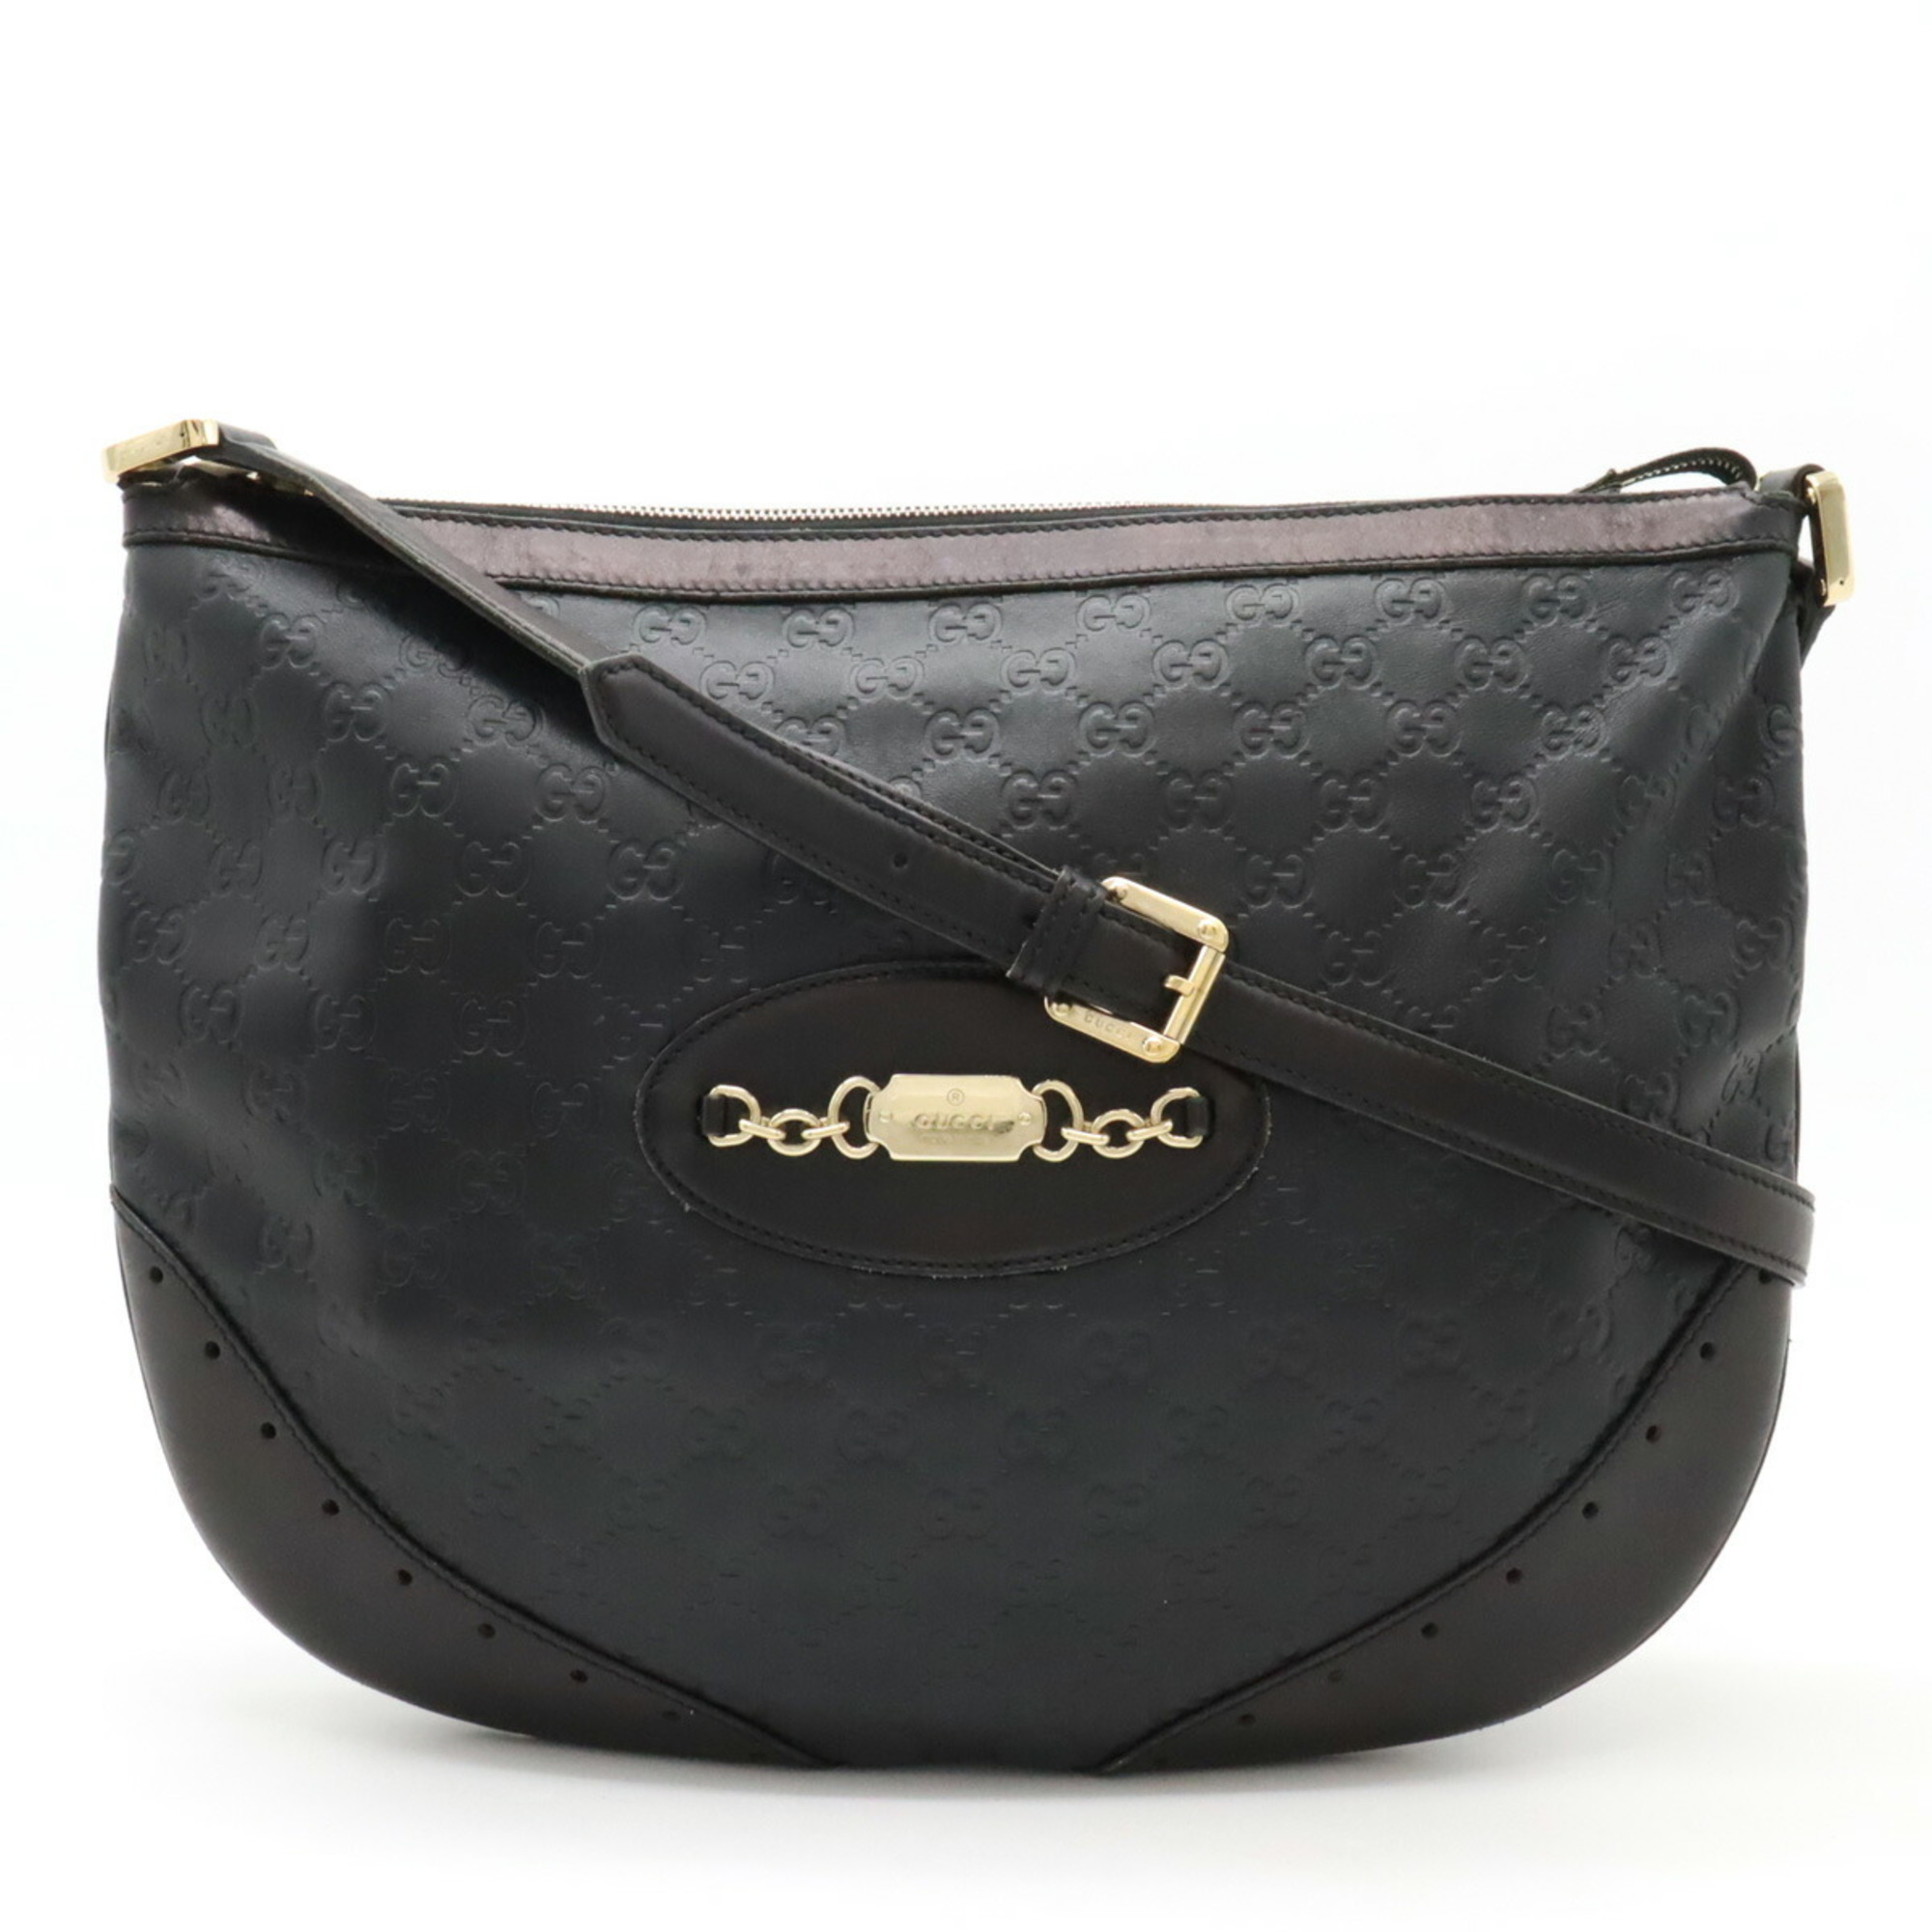 GUCCI Guccissima Shoulder Bag Leather Black 145991